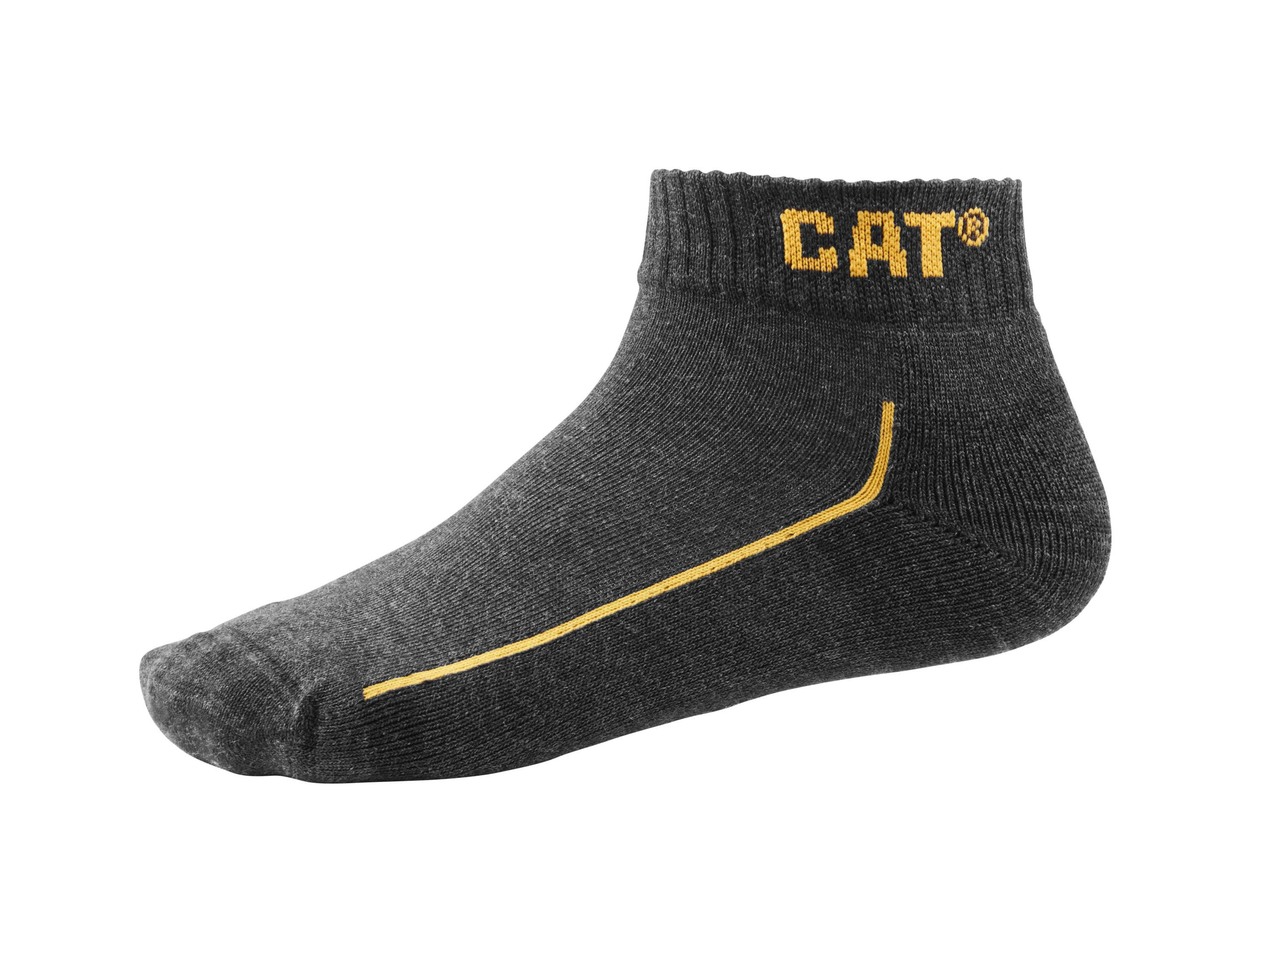 Men's Work Socks "CAT", 3 pairs